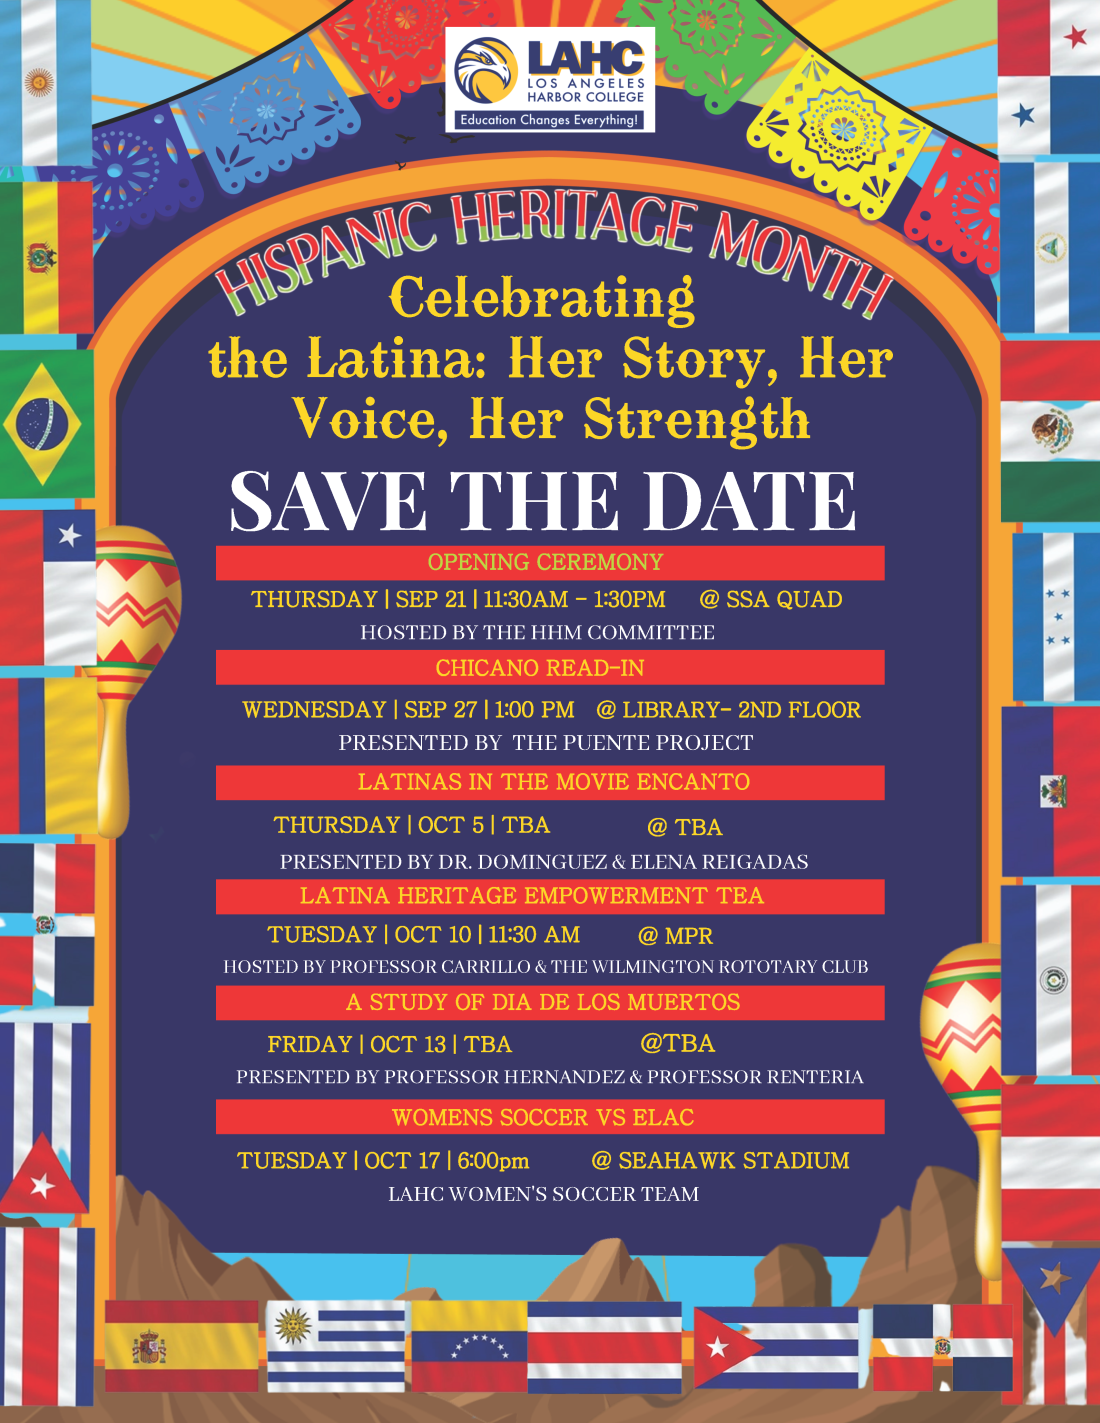 LAHC Hispanic Heritage Month